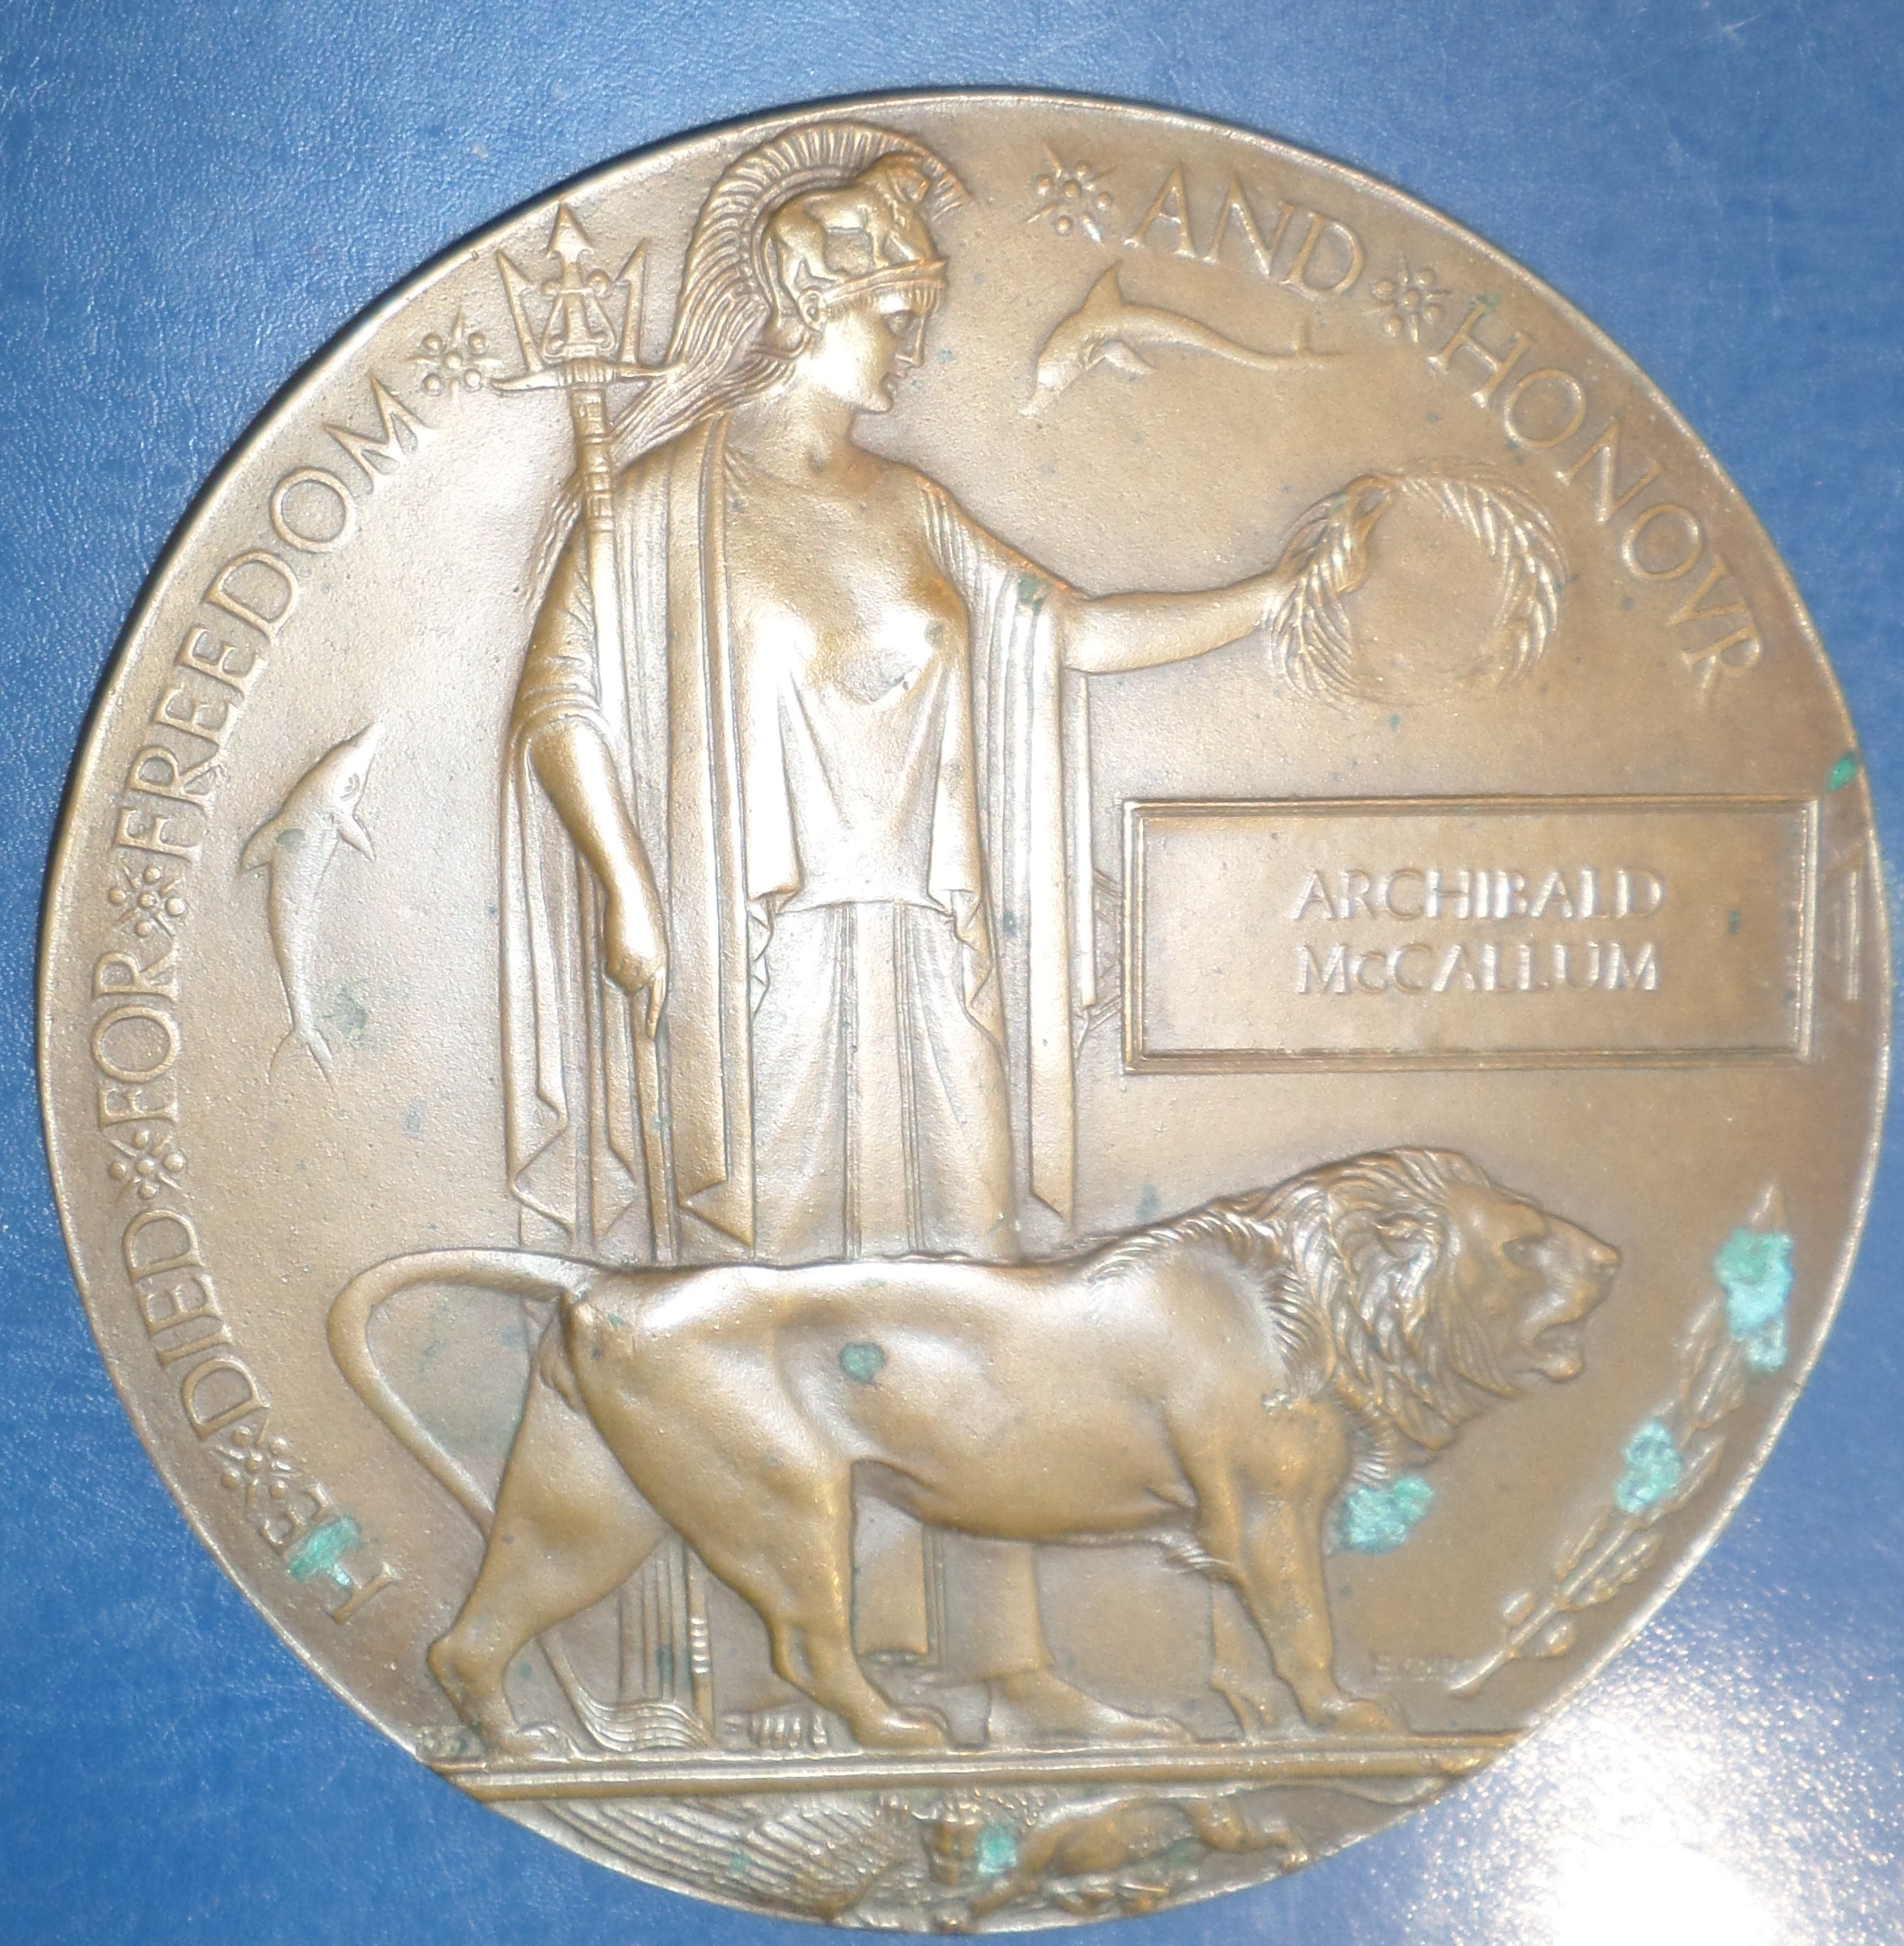 Archibald MacCallum World War One Medal